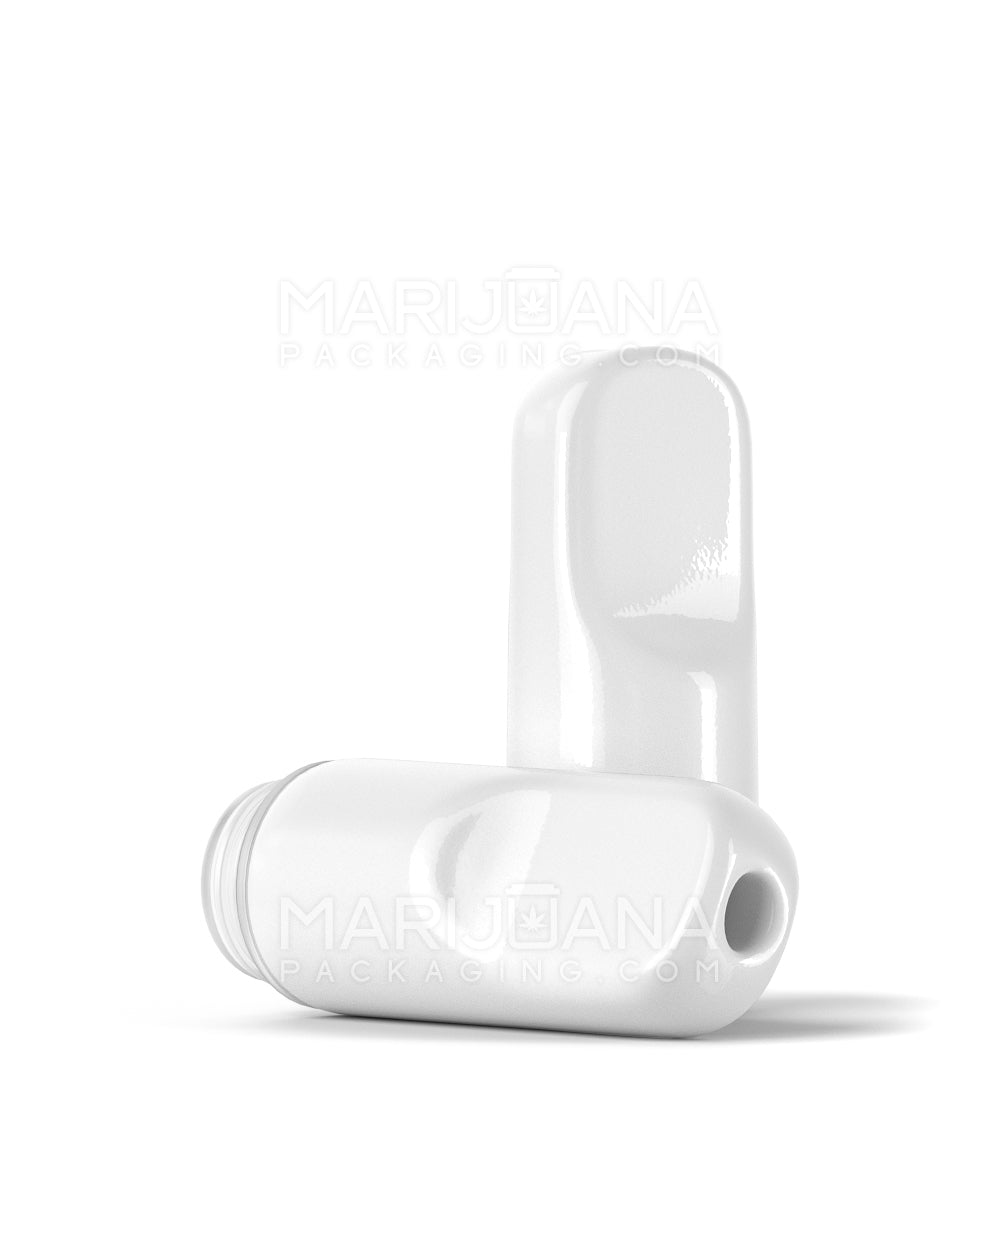 AVD | Flat Vape Mouthpiece for Glass Cartridges | White Ceramic - Eazy Press - 600 Count - 1